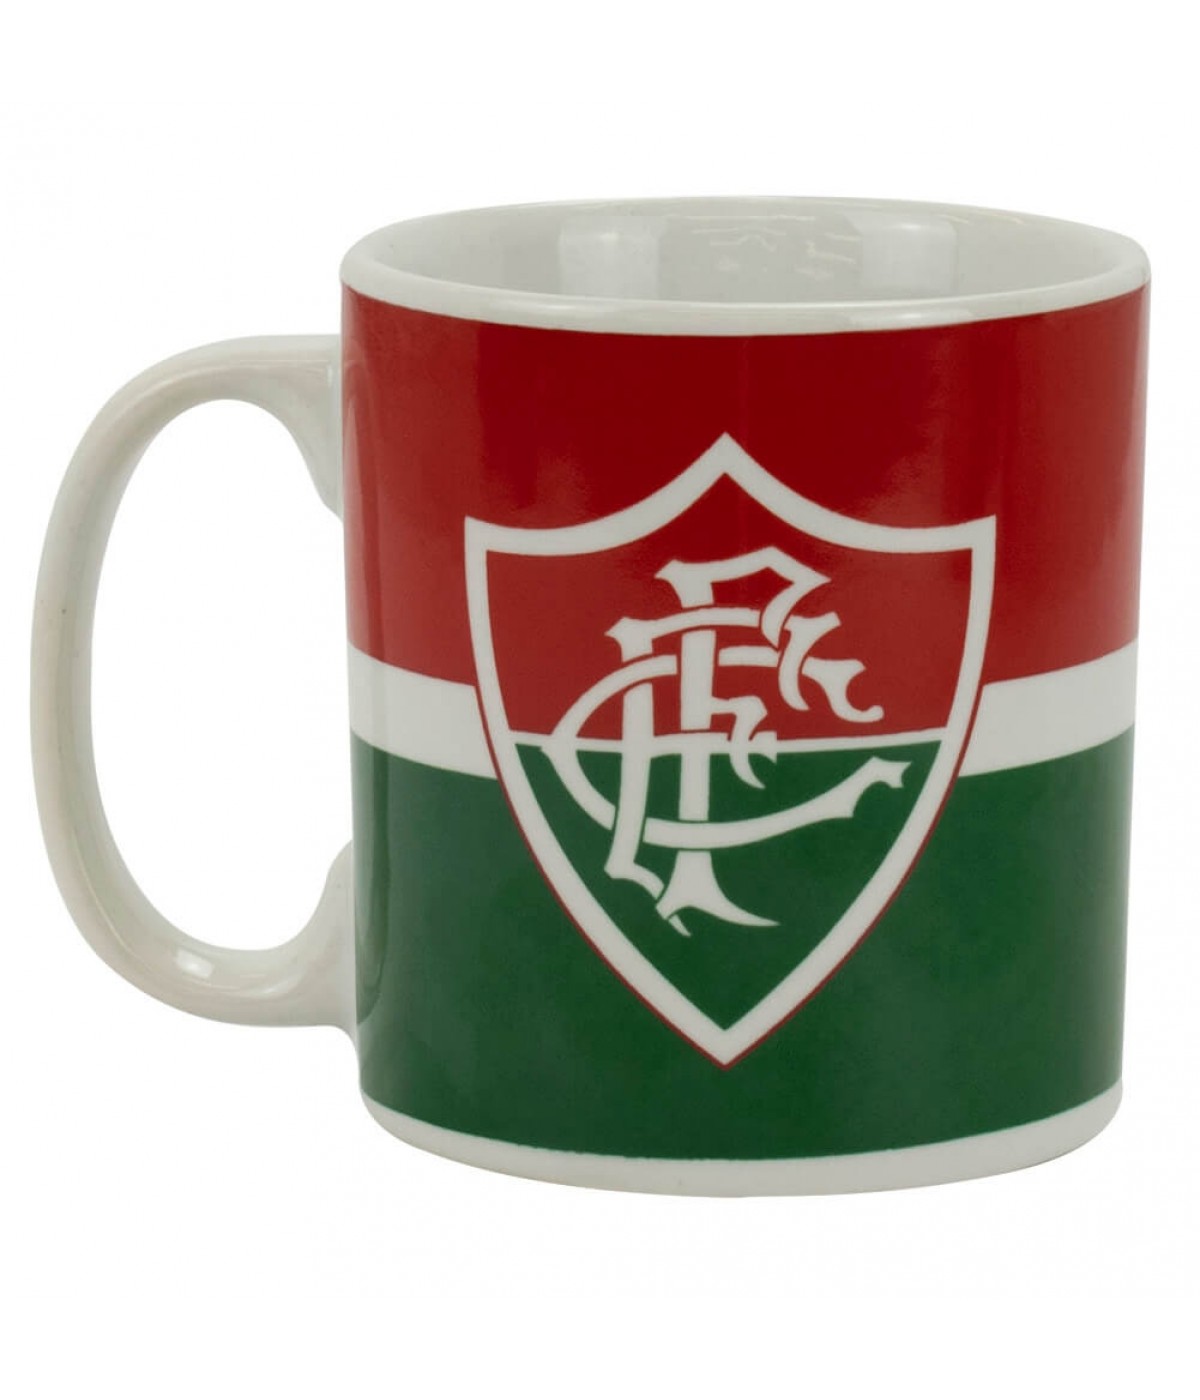 Caneca Porcelana 300ml - Fluminense